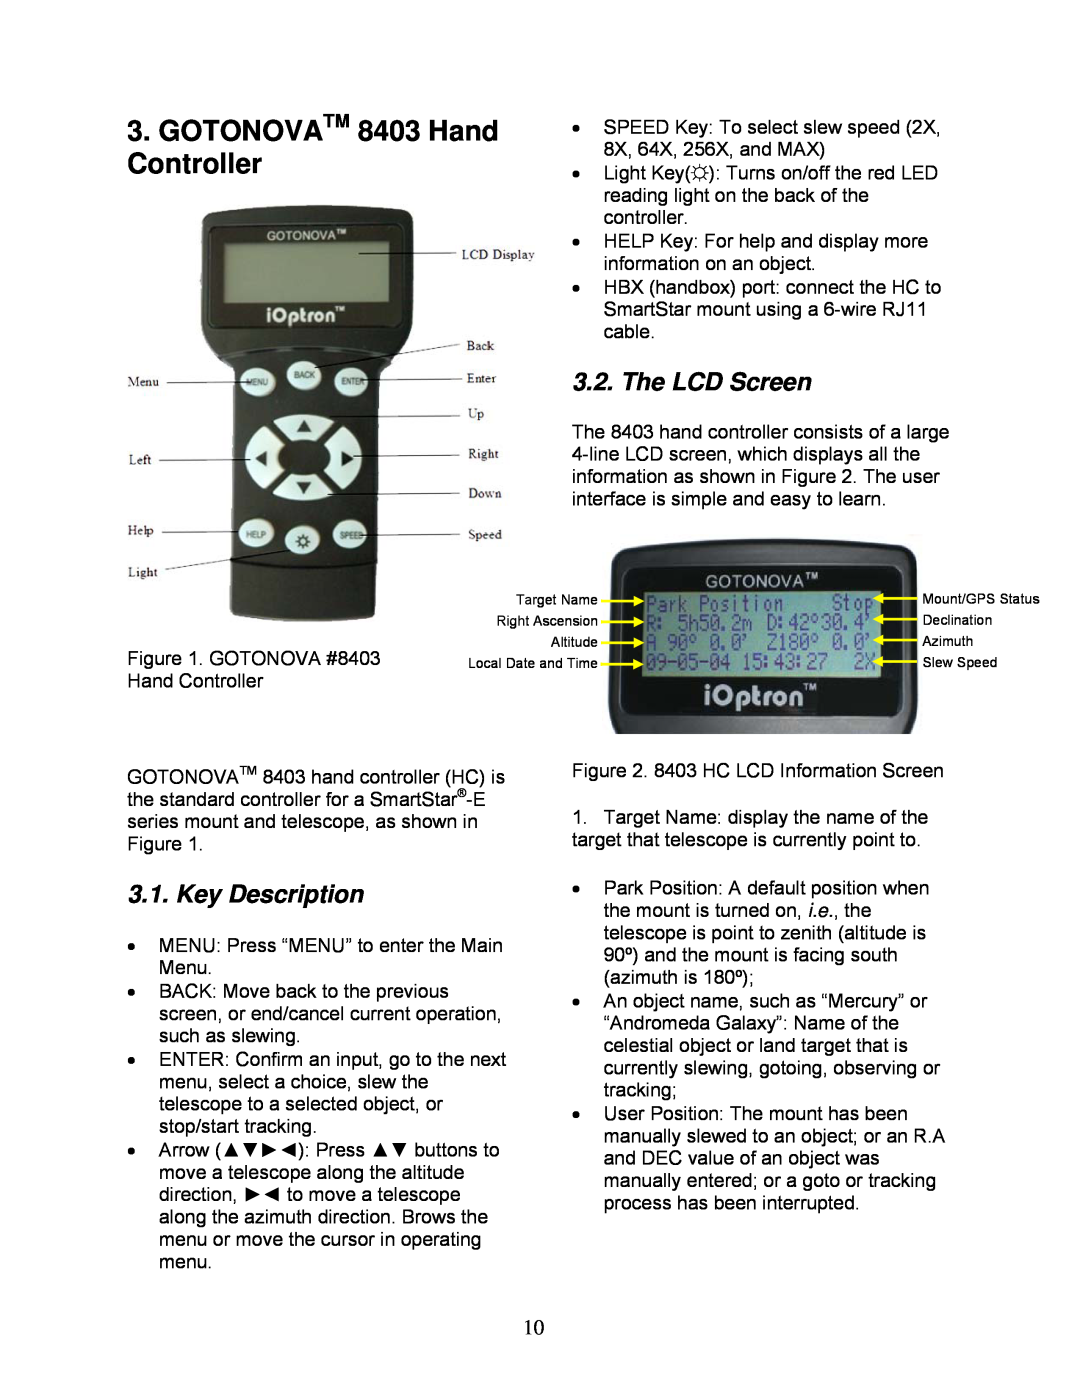 iOptron 8503, 8504, 8502, 8500 instruction manual GOTONOVATM 8403 Hand Controller, The LCD Screen, Key Description 